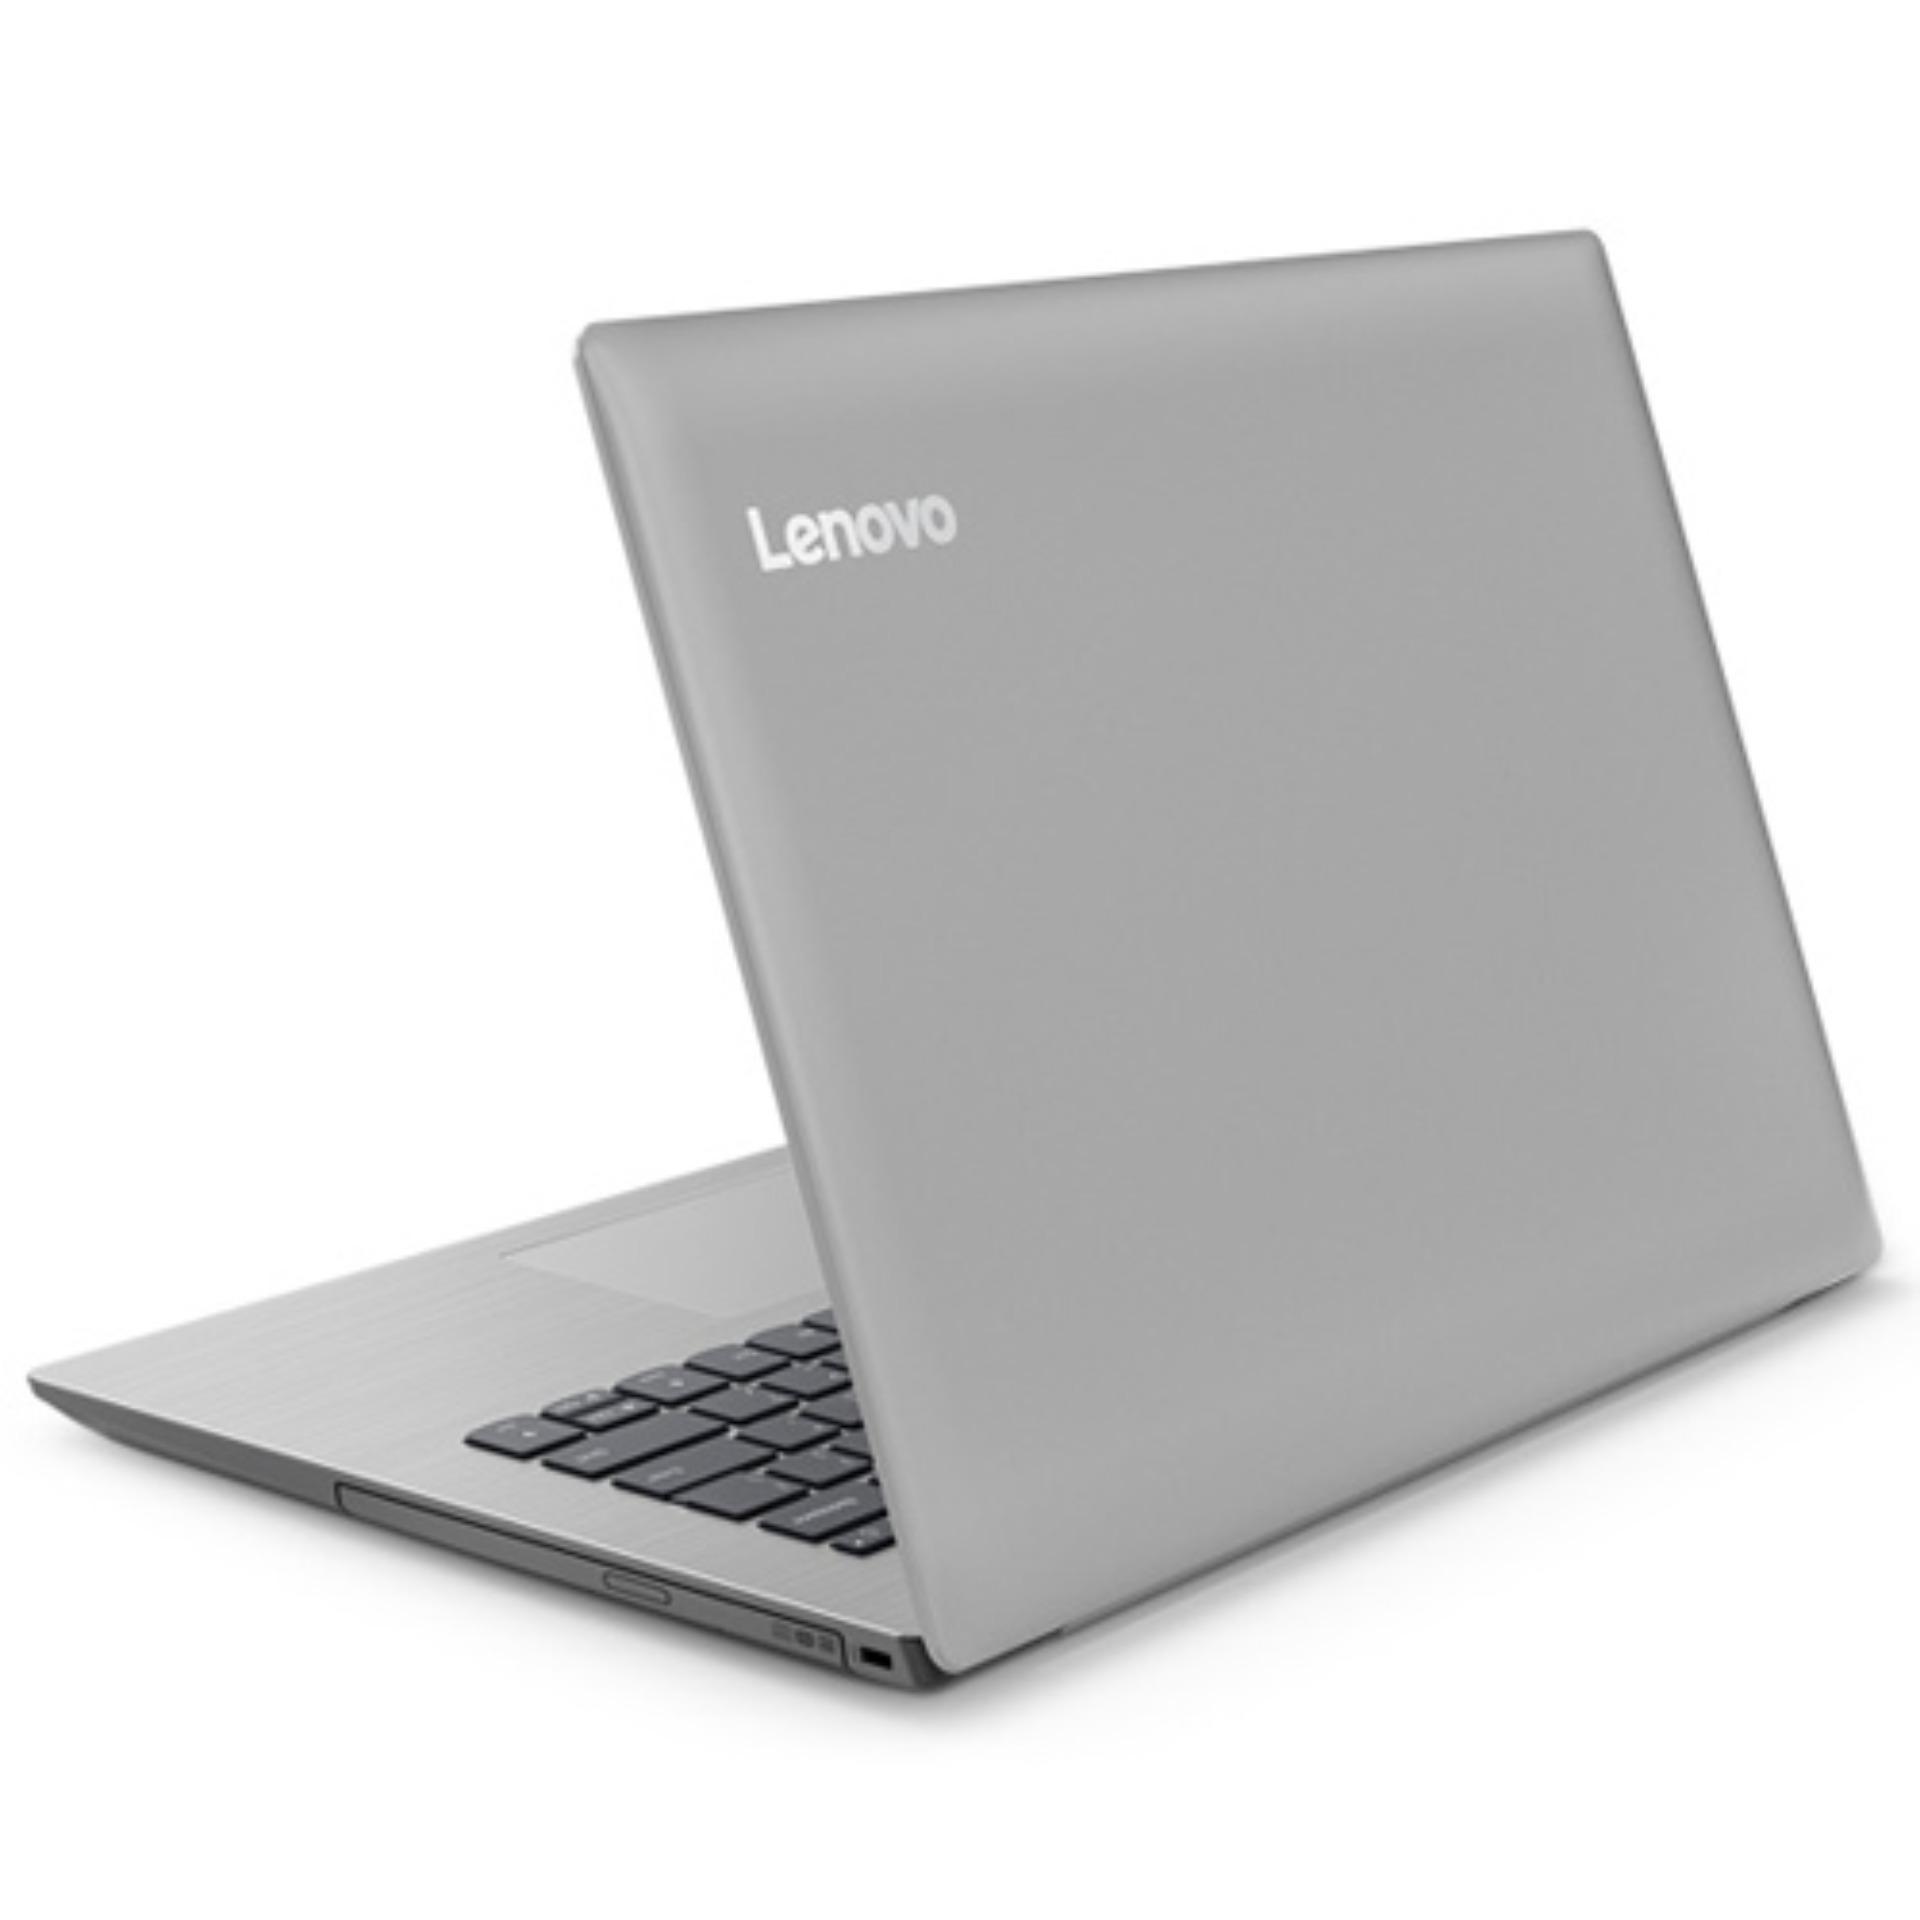 Spesifikasi Lenovo Ideapad 330 14ast 39id dan Update Harga